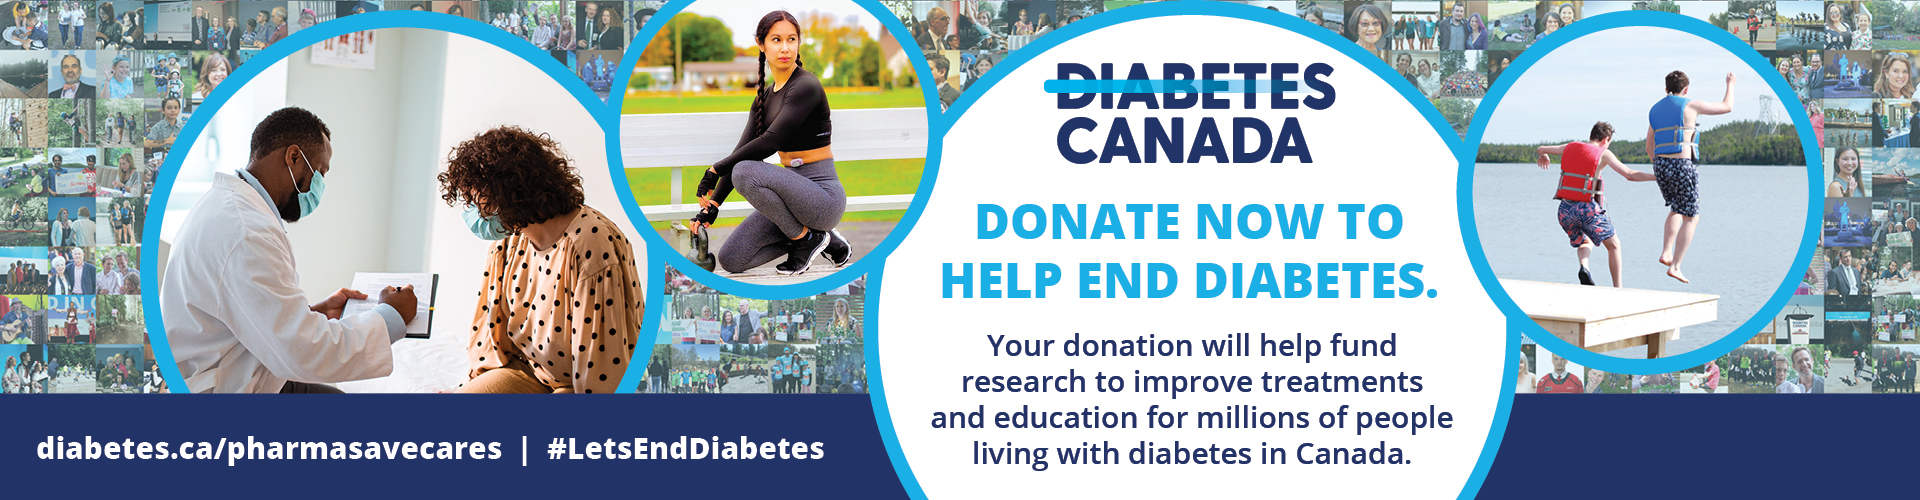 Diabetes Canada - Donate to end diabetes.